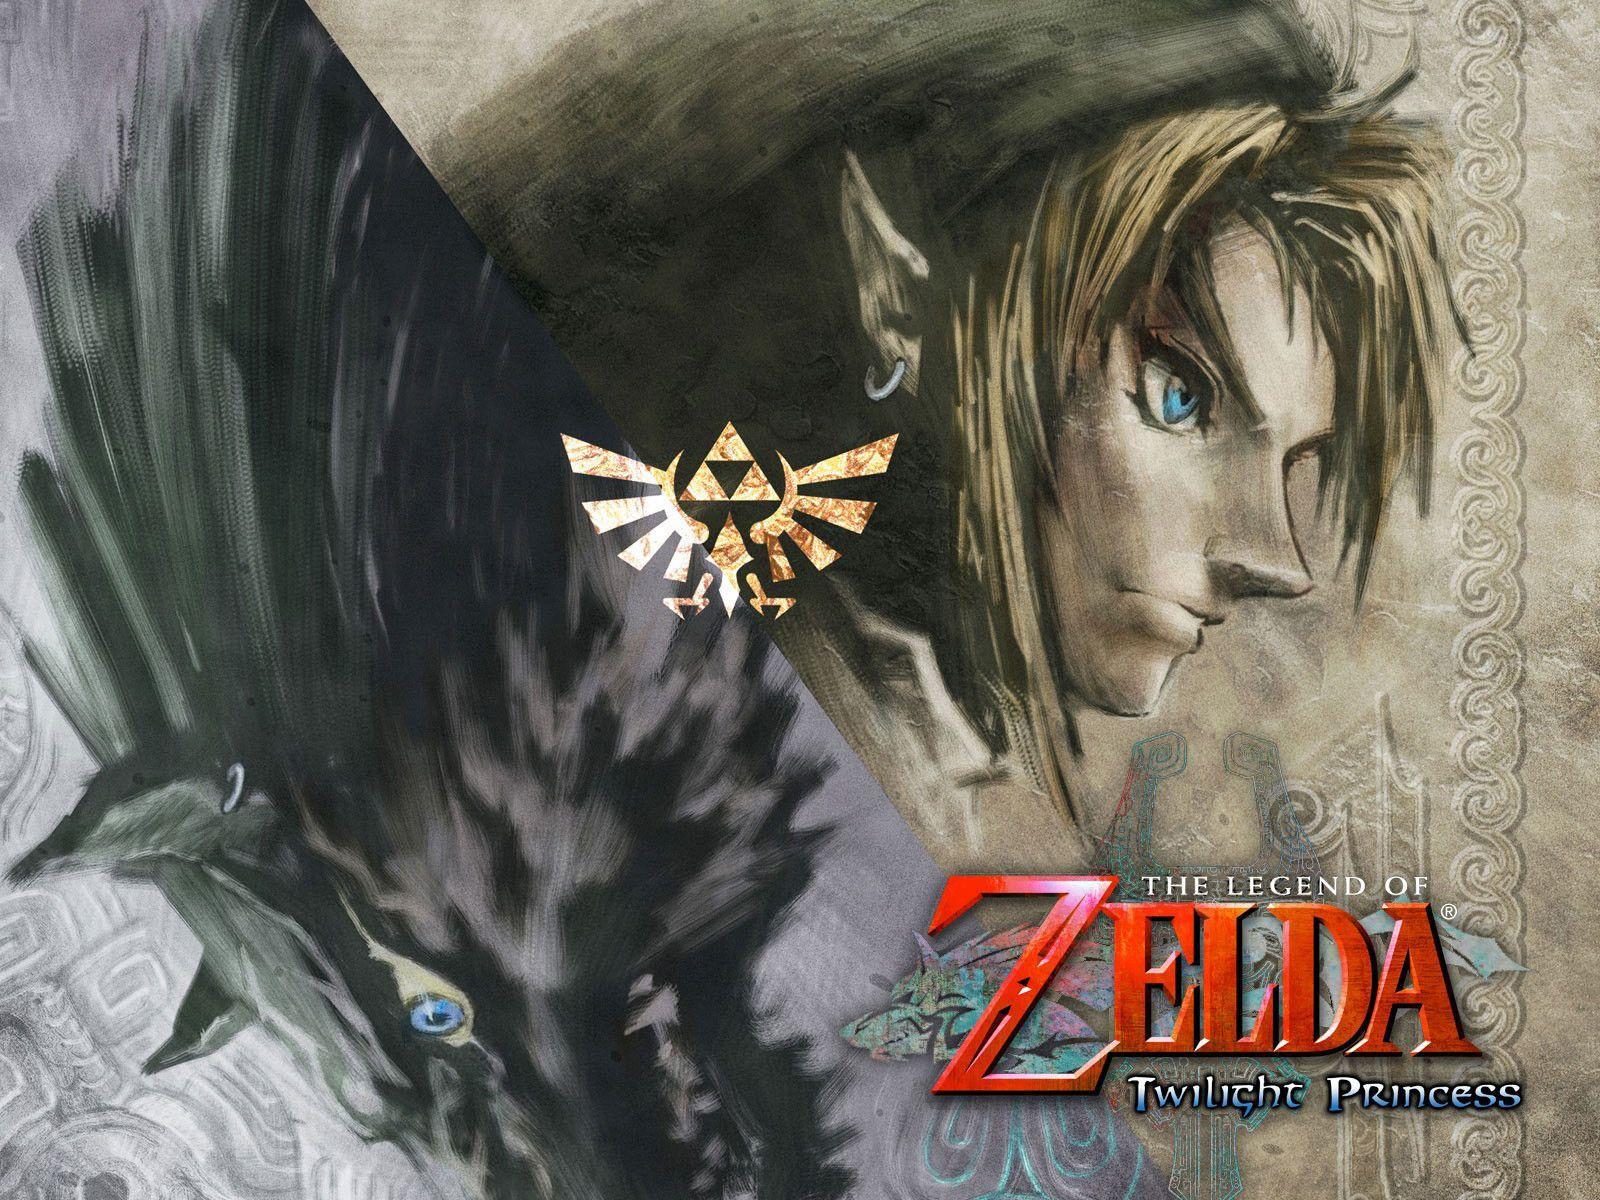 Wallpaper.wiki The Legend Of Zelda Twilight Princess Wallpaper PIC